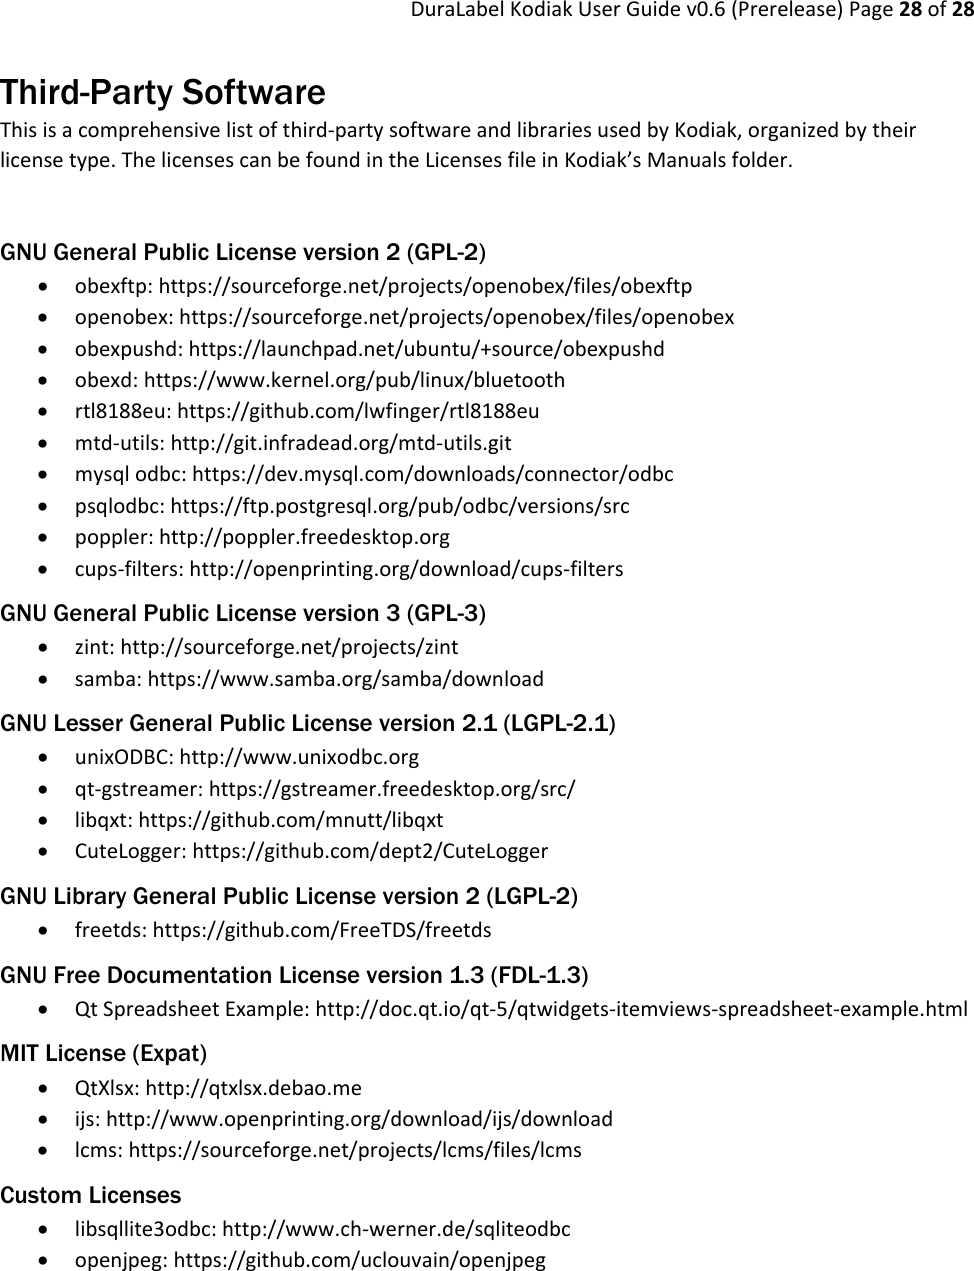 DuraLabelKodiakUserGuidev0.6(Prerelease)Page28of28Third-Party Software Thisisacomprehensivelistofthird‐partysoftwareandlibrariesusedbyKodiak,organizedbytheirlicensetype.ThelicensescanbefoundintheLicensesfileinKodiak’sManualsfolder.GNU General Public License version 2 (GPL-2)  obexftp:https://sourceforge.net/projects/openobex/files/obexftp openobex:https://sourceforge.net/projects/openobex/files/openobex obexpushd:https://launchpad.net/ubuntu/+source/obexpushd obexd:https://www.kernel.org/pub/linux/bluetooth rtl8188eu:https://github.com/lwfinger/rtl8188eu mtd‐utils:http://git.infradead.org/mtd‐utils.git mysqlodbc:https://dev.mysql.com/downloads/connector/odbc psqlodbc:https://ftp.postgresql.org/pub/odbc/versions/src poppler:http://poppler.freedesktop.org cups‐filters:http://openprinting.org/download/cups‐filtersGNU General Public License version 3 (GPL-3)  zint:http://sourceforge.net/projects/zint samba:https://www.samba.org/samba/downloadGNU Lesser General Public License version 2.1 (LGPL-2.1)  unixODBC:http://www.unixodbc.org qt‐gstreamer:https://gstreamer.freedesktop.org/src/ libqxt:https://github.com/mnutt/libqxt CuteLogger:https://github.com/dept2/CuteLoggerGNU Library General Public License version 2 (LGPL-2)  freetds:https://github.com/FreeTDS/freetdsGNU Free Documentation License version 1.3 (FDL-1.3)  QtSpreadsheetExample:http://doc.qt.io/qt‐5/qtwidgets‐itemviews‐spreadsheet‐example.htmlMIT License (Expat)  QtXlsx:http://qtxlsx.debao.me ijs:http://www.openprinting.org/download/ijs/download lcms:https://sourceforge.net/projects/lcms/files/lcmsCustom Licenses  libsqllite3odbc:http://www.ch‐werner.de/sqliteodbc openjpeg:https://github.com/uclouvain/openjpeg